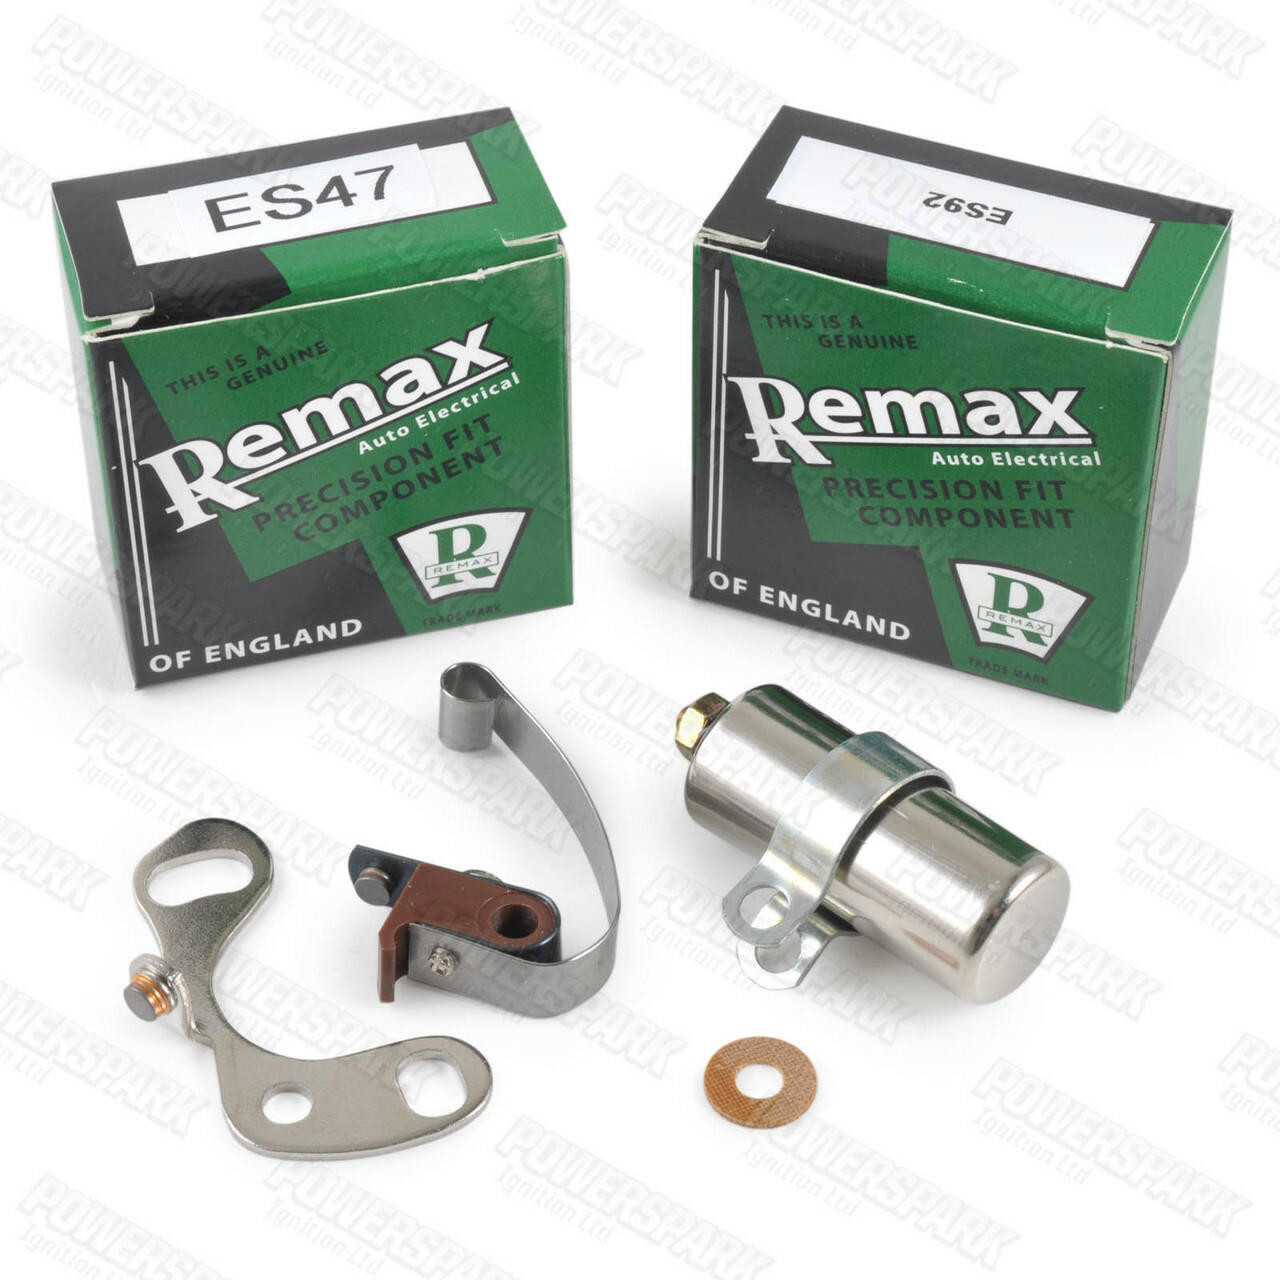 Remax Remax branded Lucas DK2 DK2A DK4 DK4A DK6 DK6A DKH4 Points and Condensor